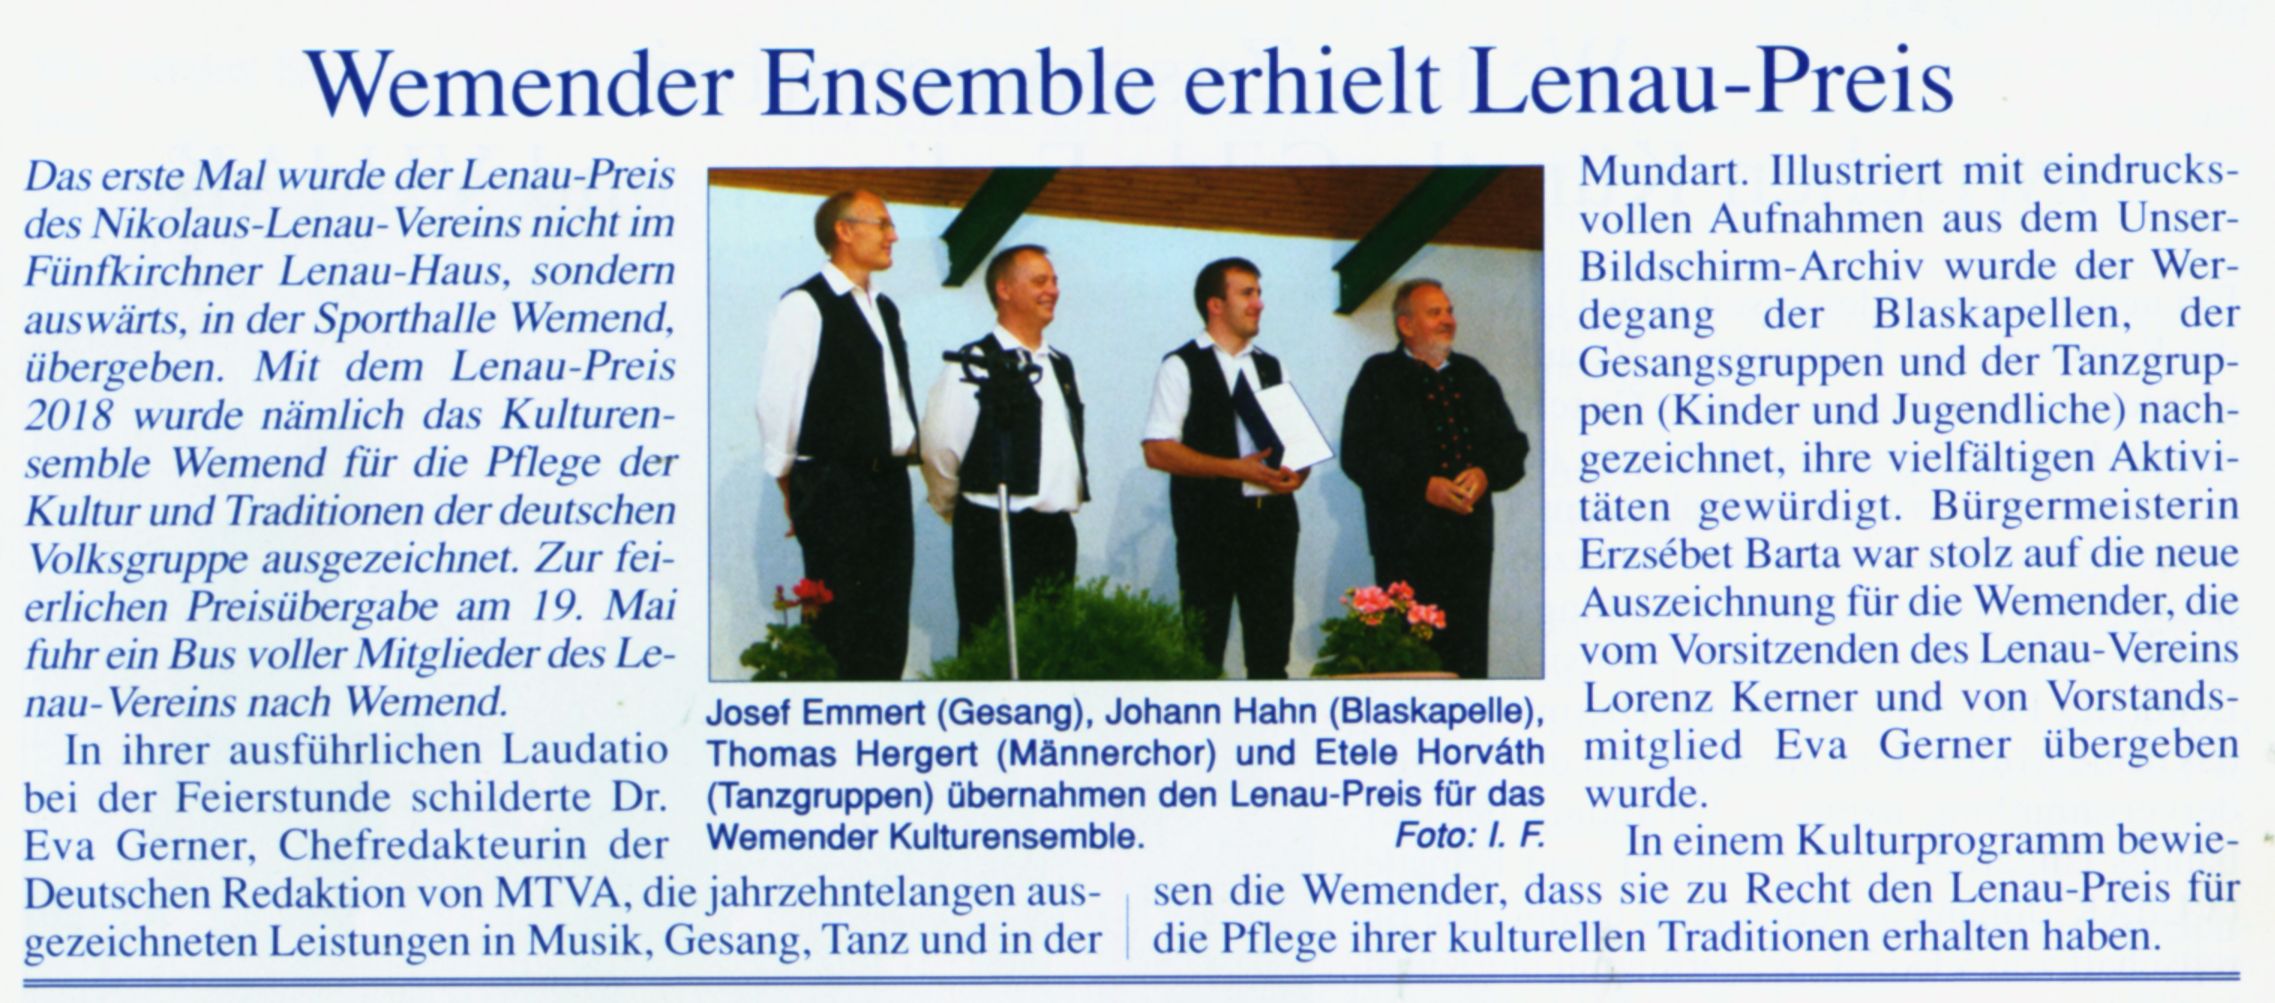 Wemender Ensemble erhielt Lenau-Preis